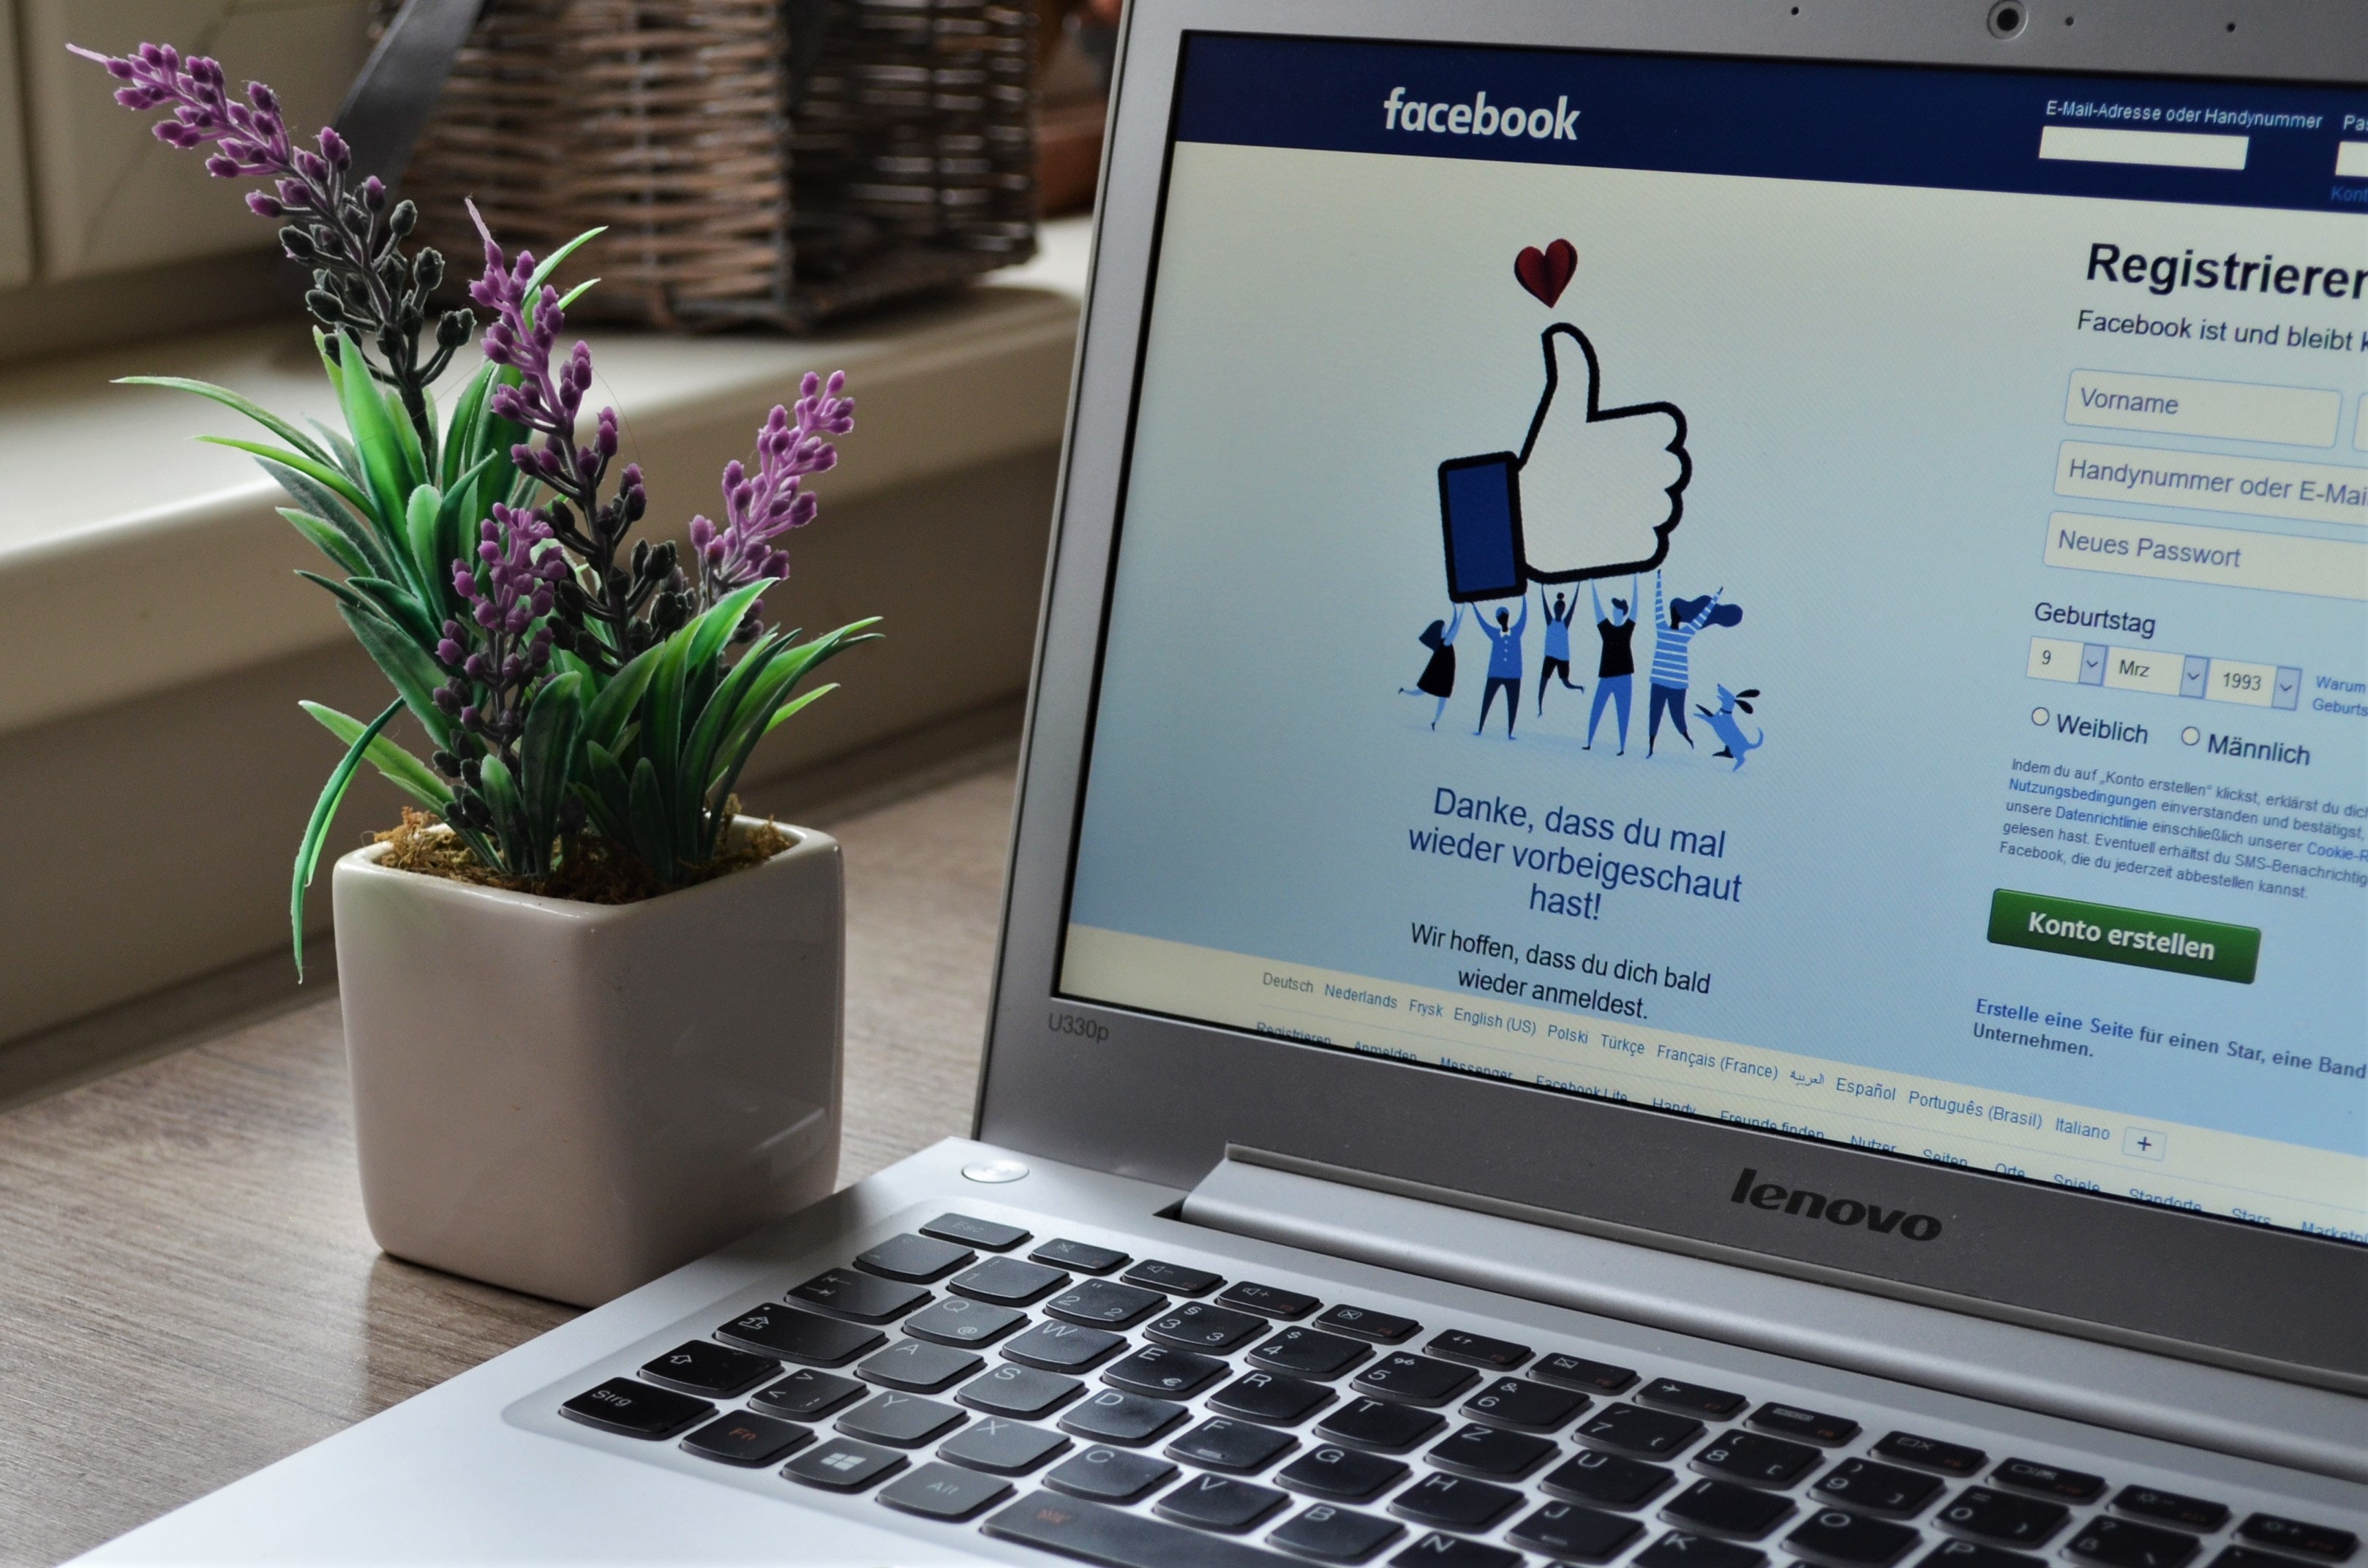 Biznese kini kujdes, Facebook godet komentet e rreme